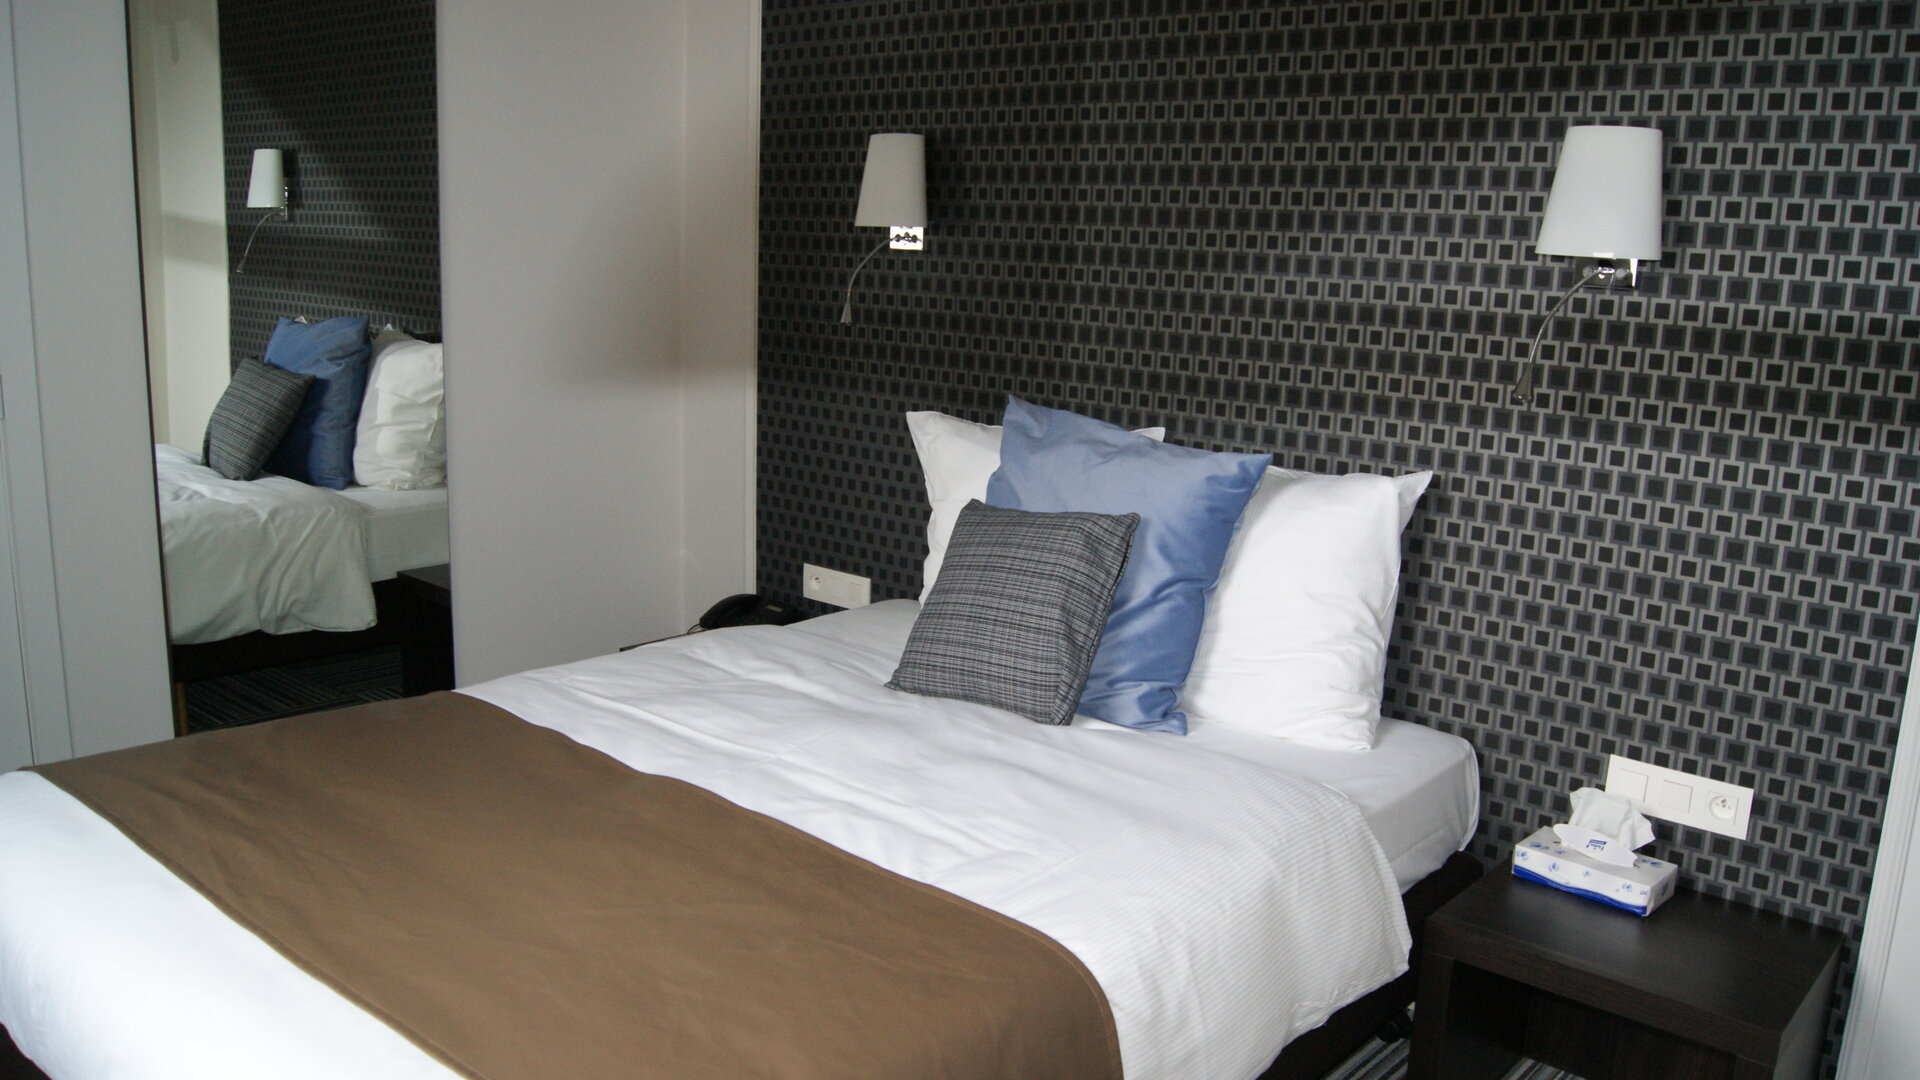 Hotel Malpertuus Riemst - Standard Room